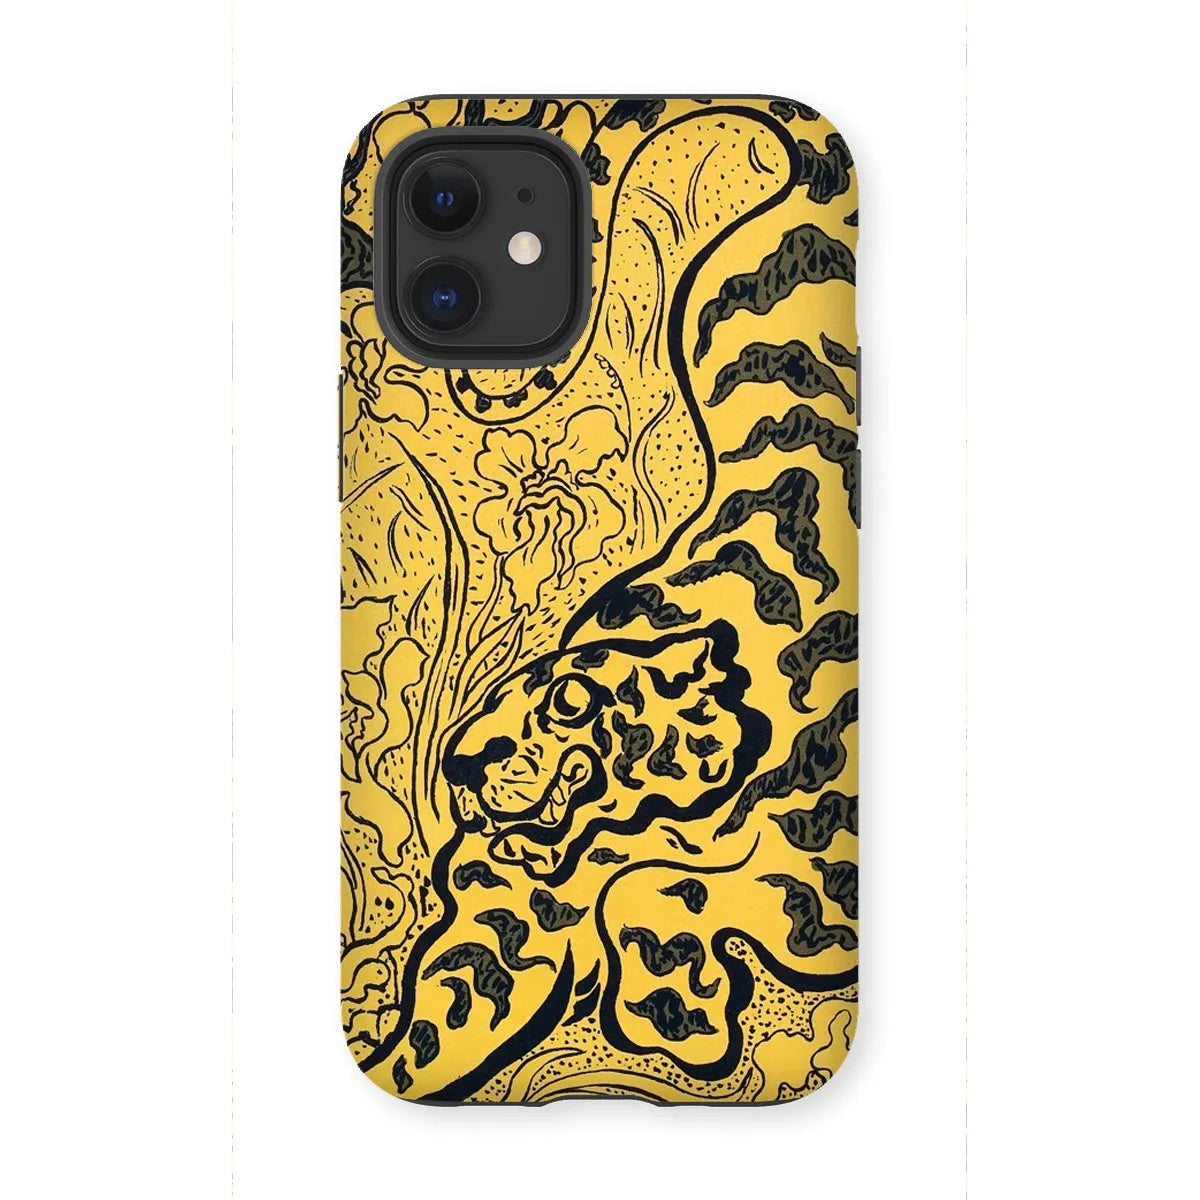 Tiger In The Jungle - Graphic Art Phone Case - Paul Ranson - Iphone 12 Mini / Matte - Mobile Phone Cases - Aesthetic Art